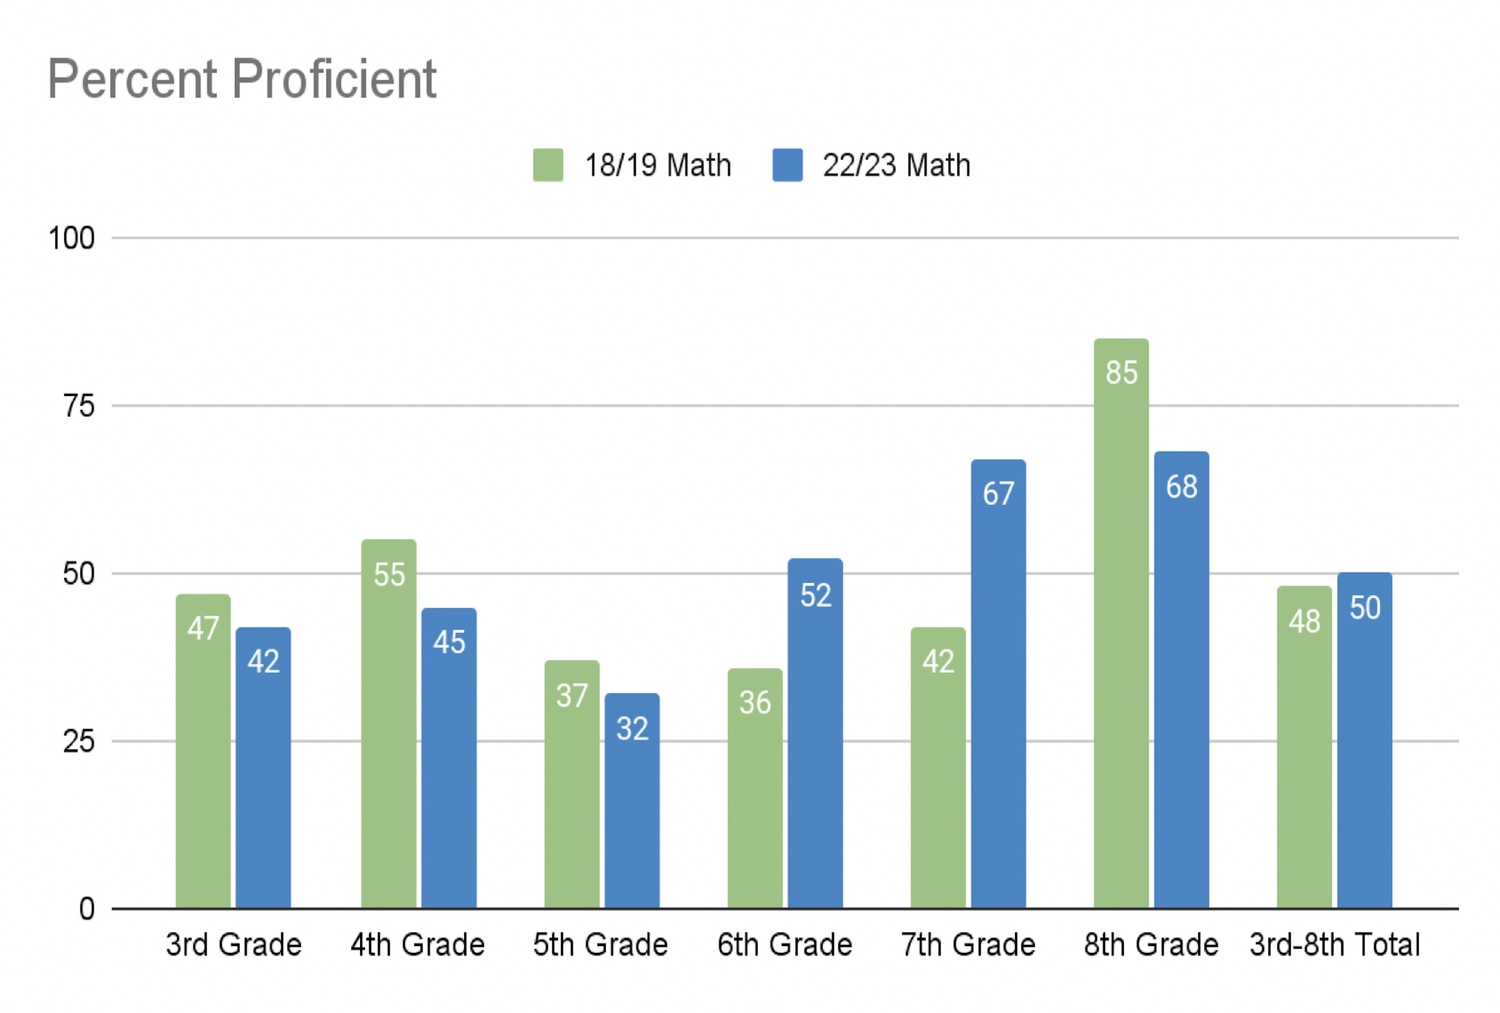 Comparing math  proficiency at Springs School in the 2018-19 school year to the 2022-23 school year. SPRINGS SCHOOL